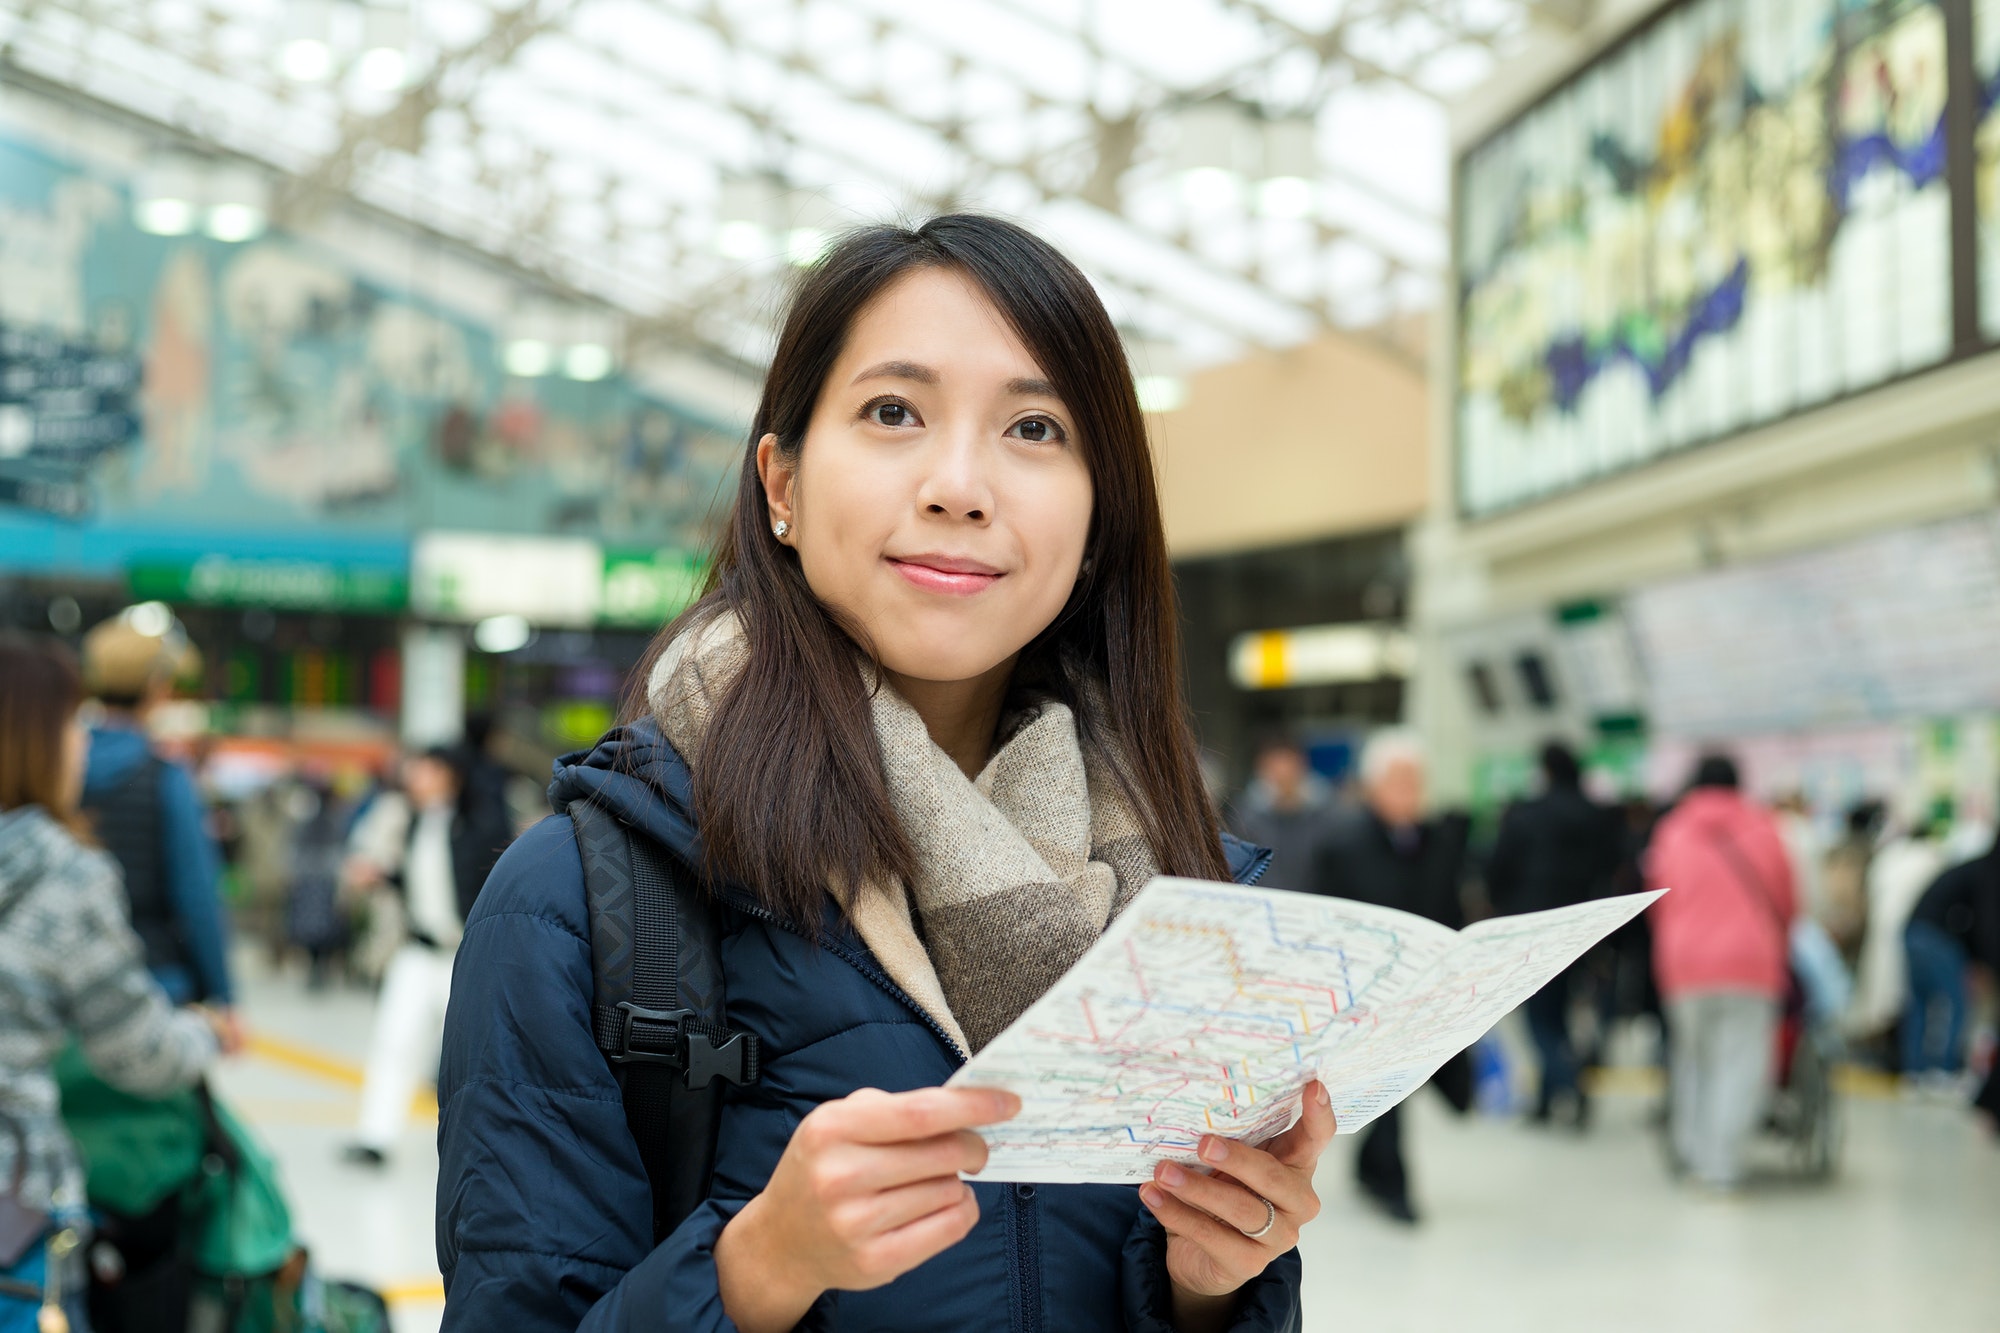 Woman using map inside train station